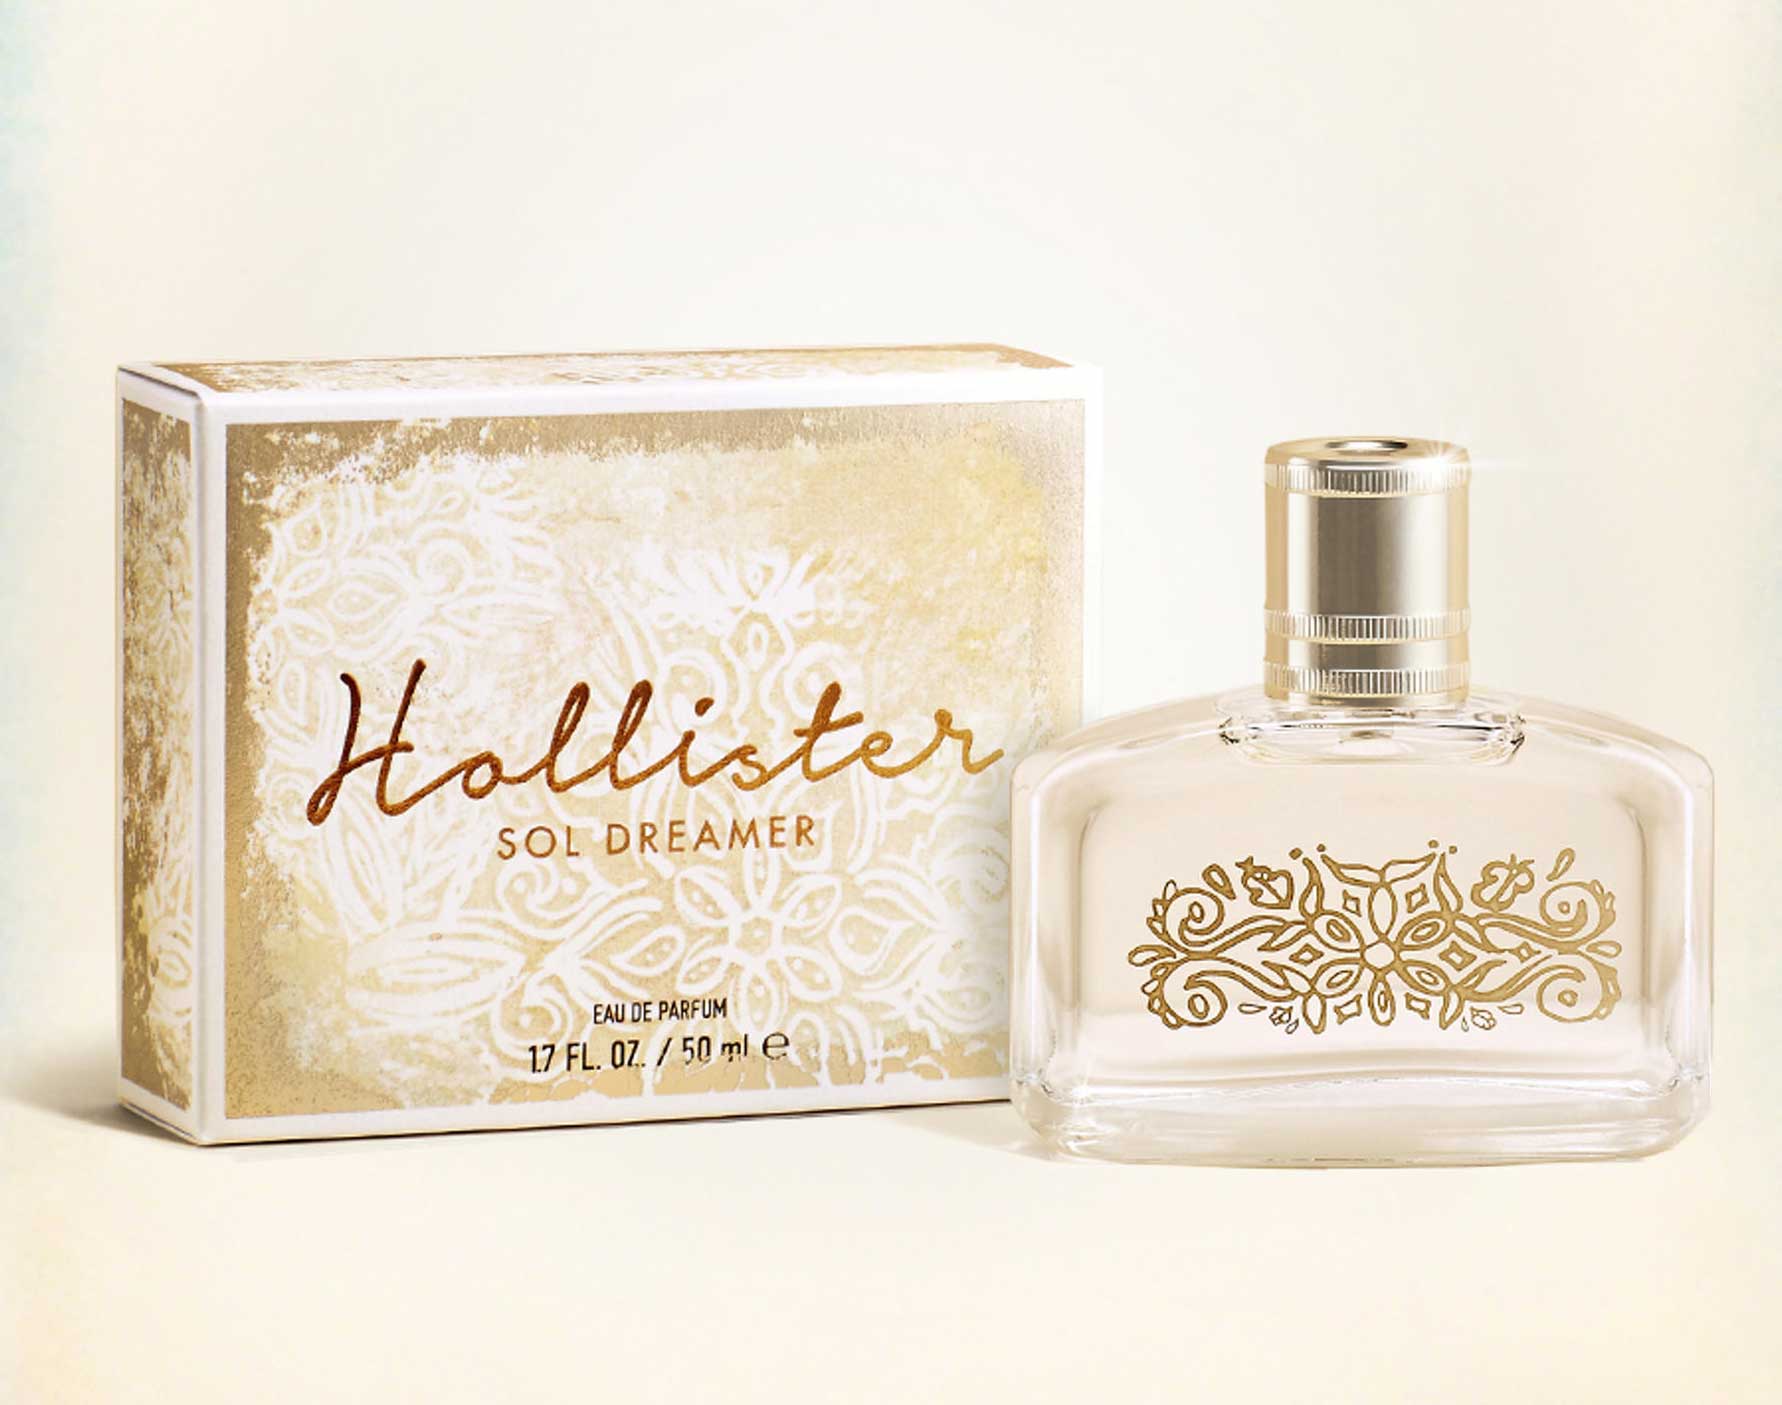 Sol Dreamer Hollister аромат — аромат 